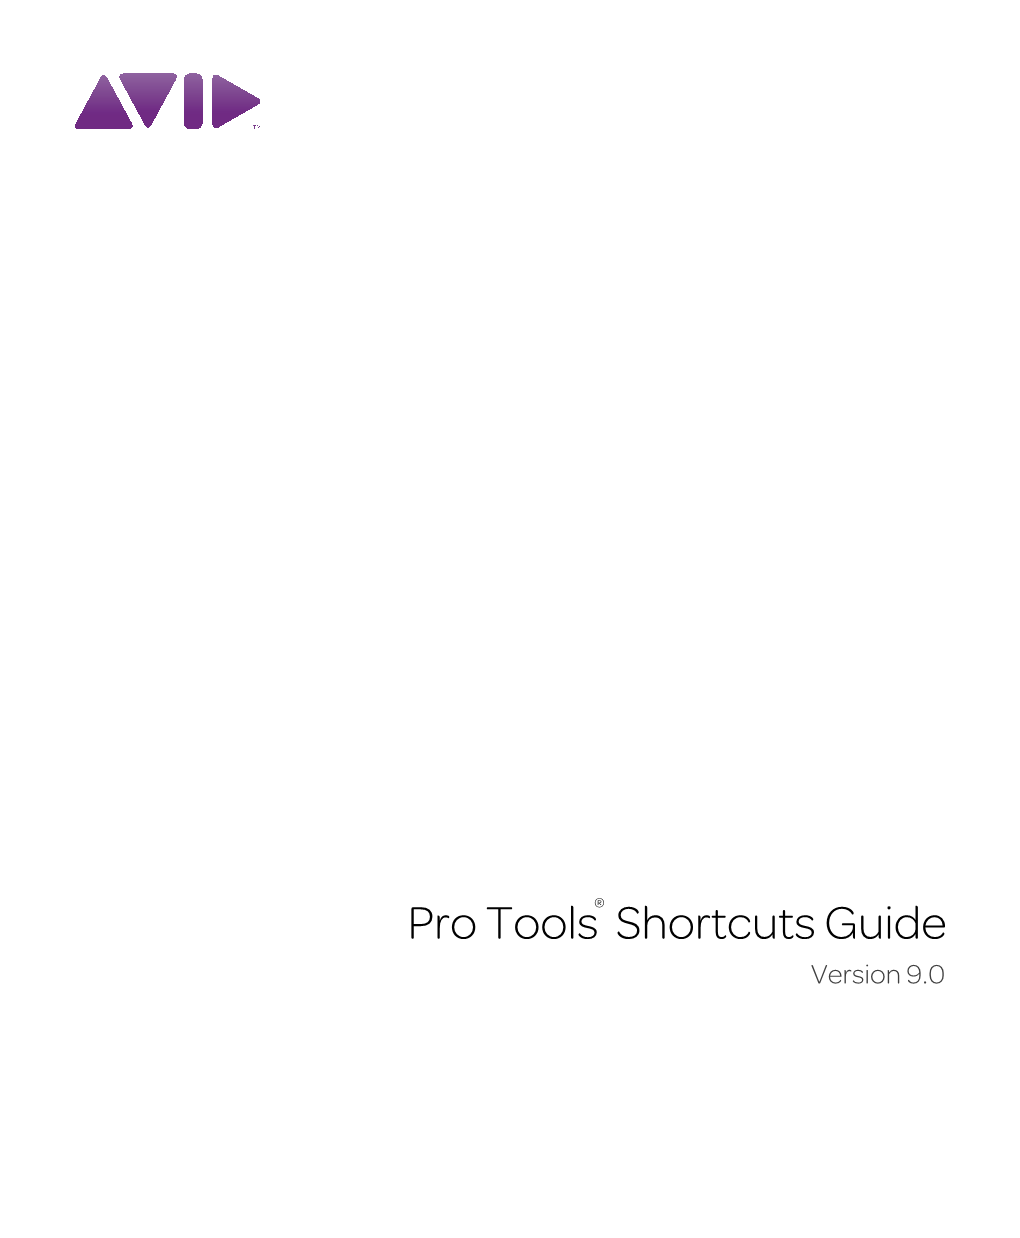 Pro Tools Shortcuts Guide Pro Tools Edit Window and Mix Window Keyboard Shortcuts